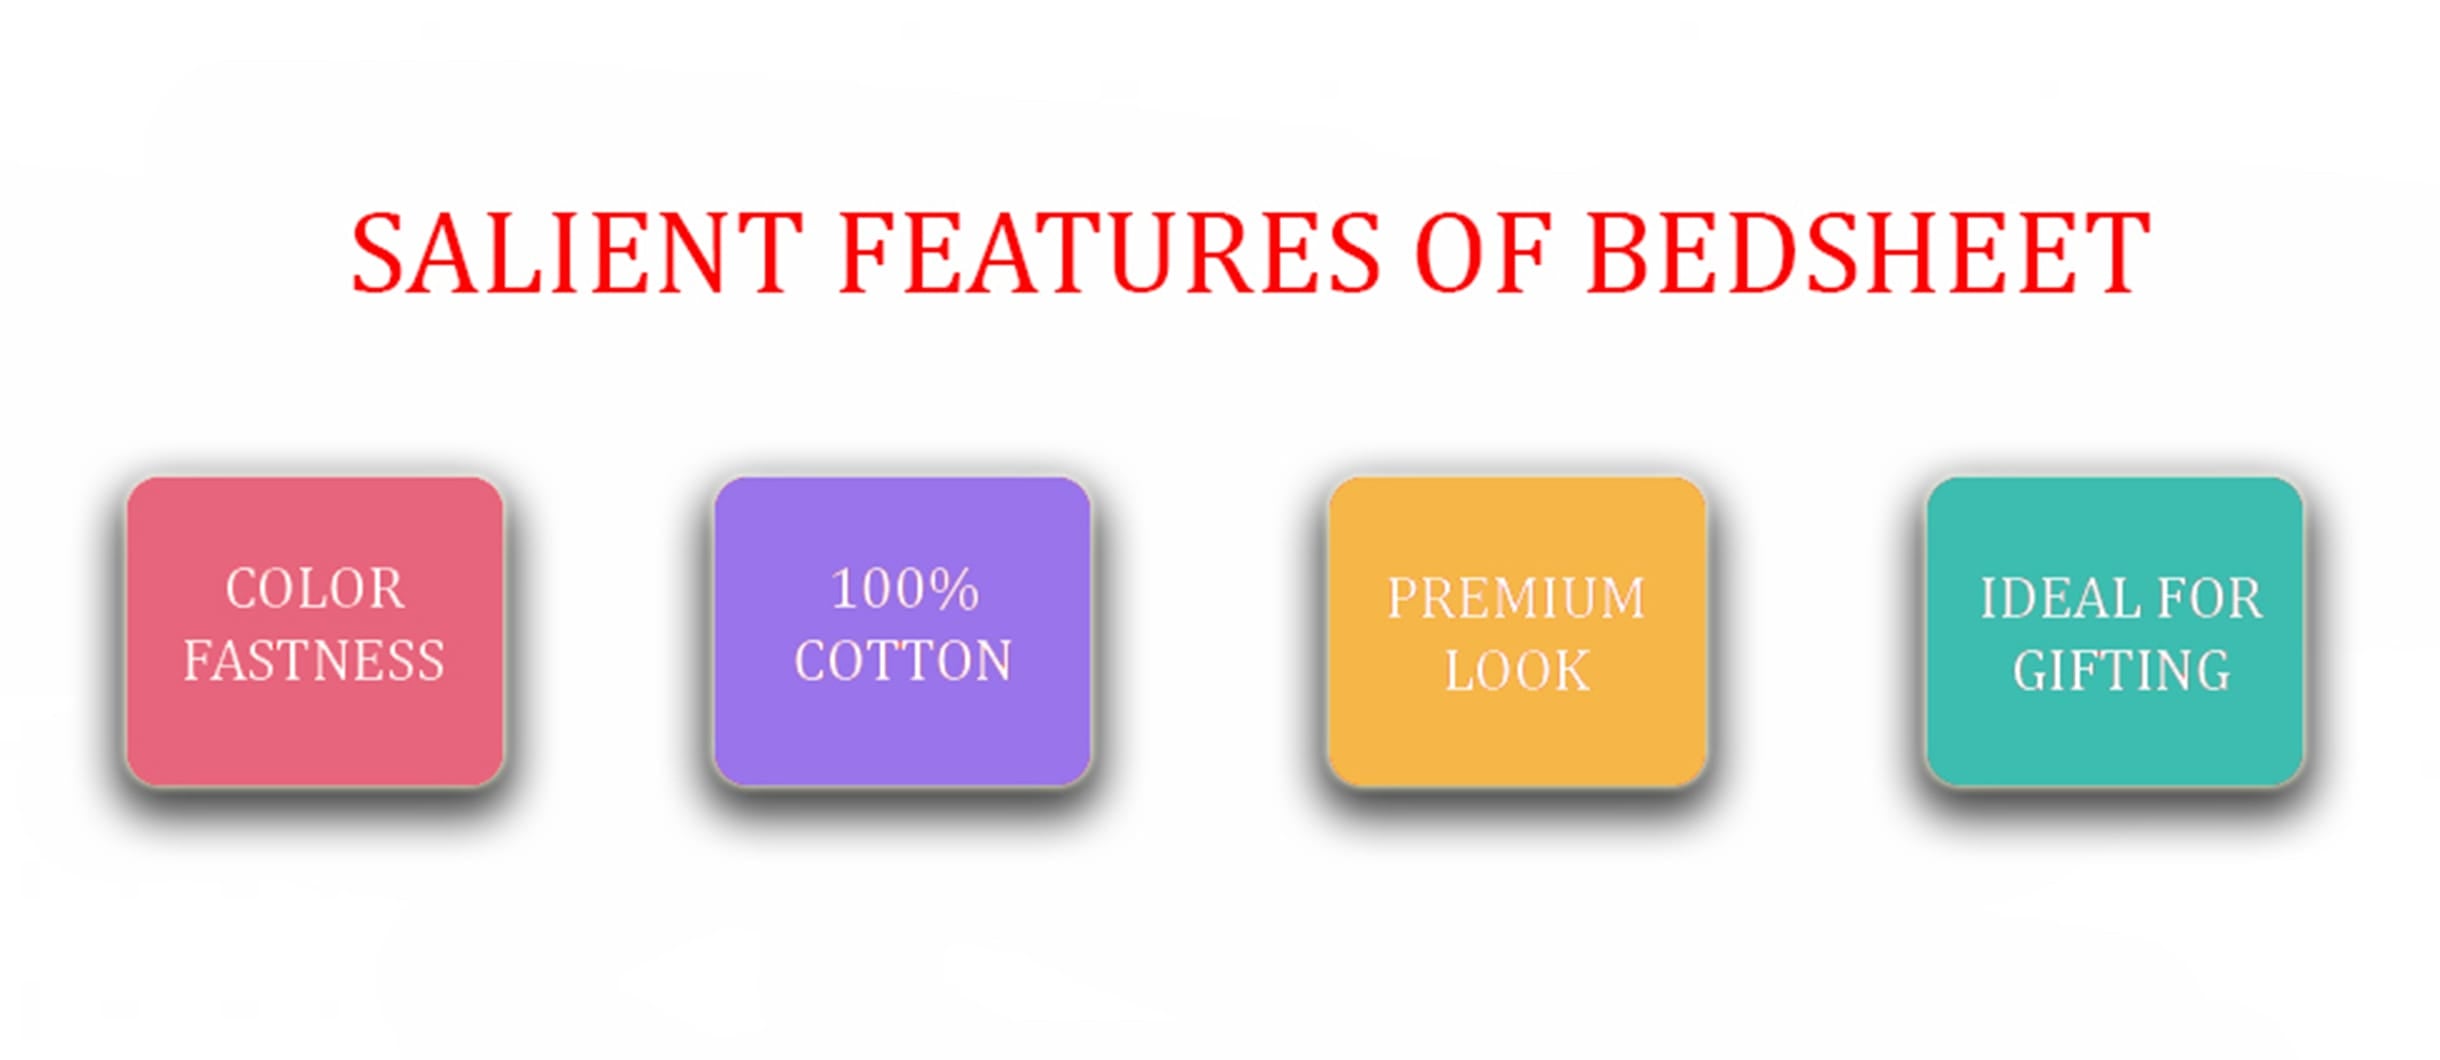 Soft Plain 210 TC Cotton Designer Bedsheet In Light Green At Best Prices